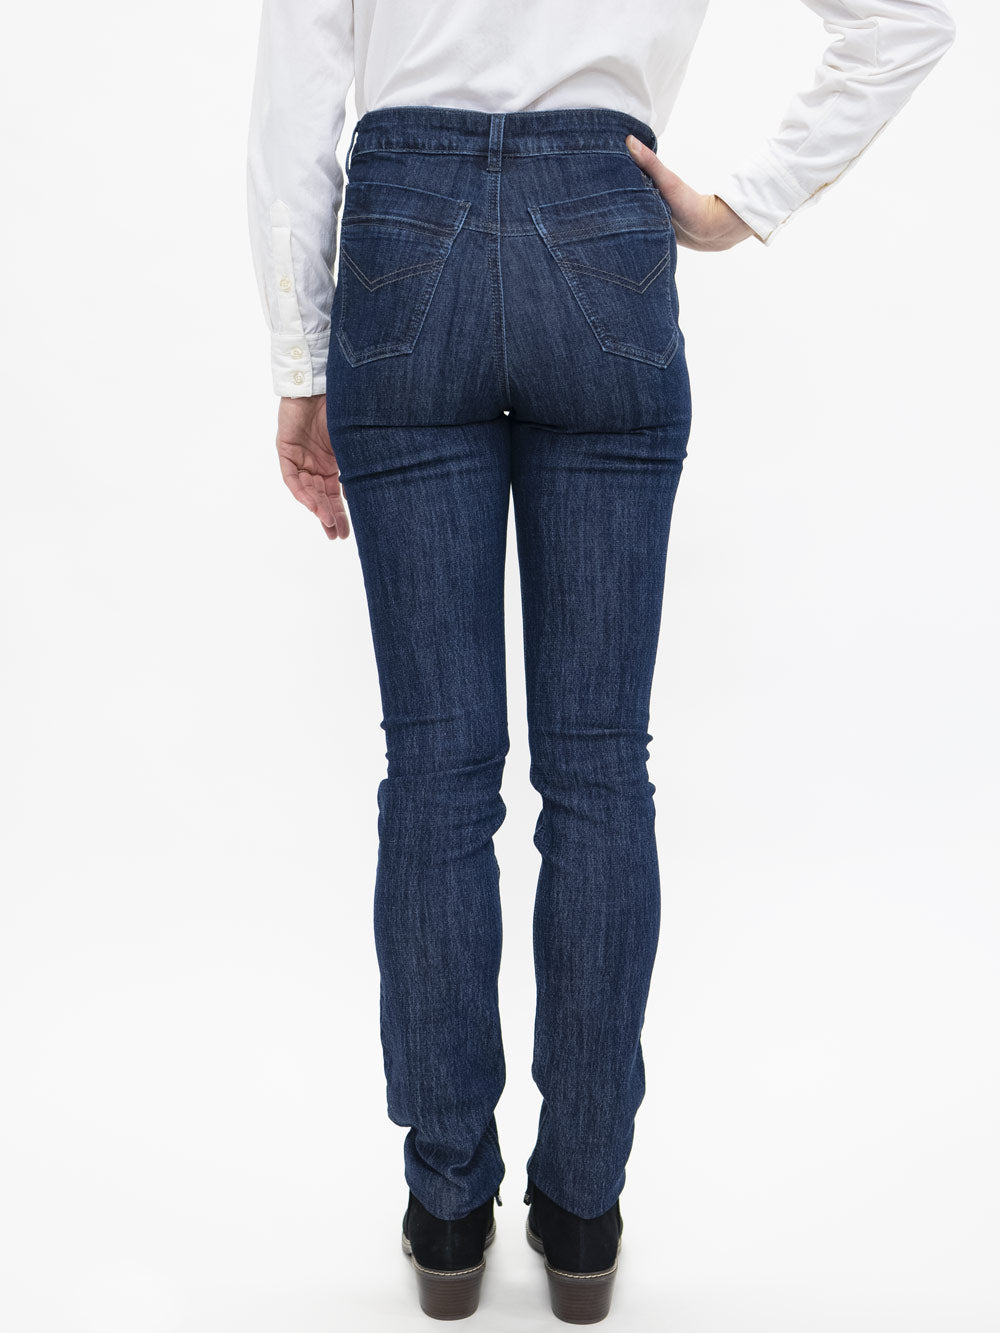 Pick-Pocket Proof® Women's Explorer Travel Jeans - Clothing Arts